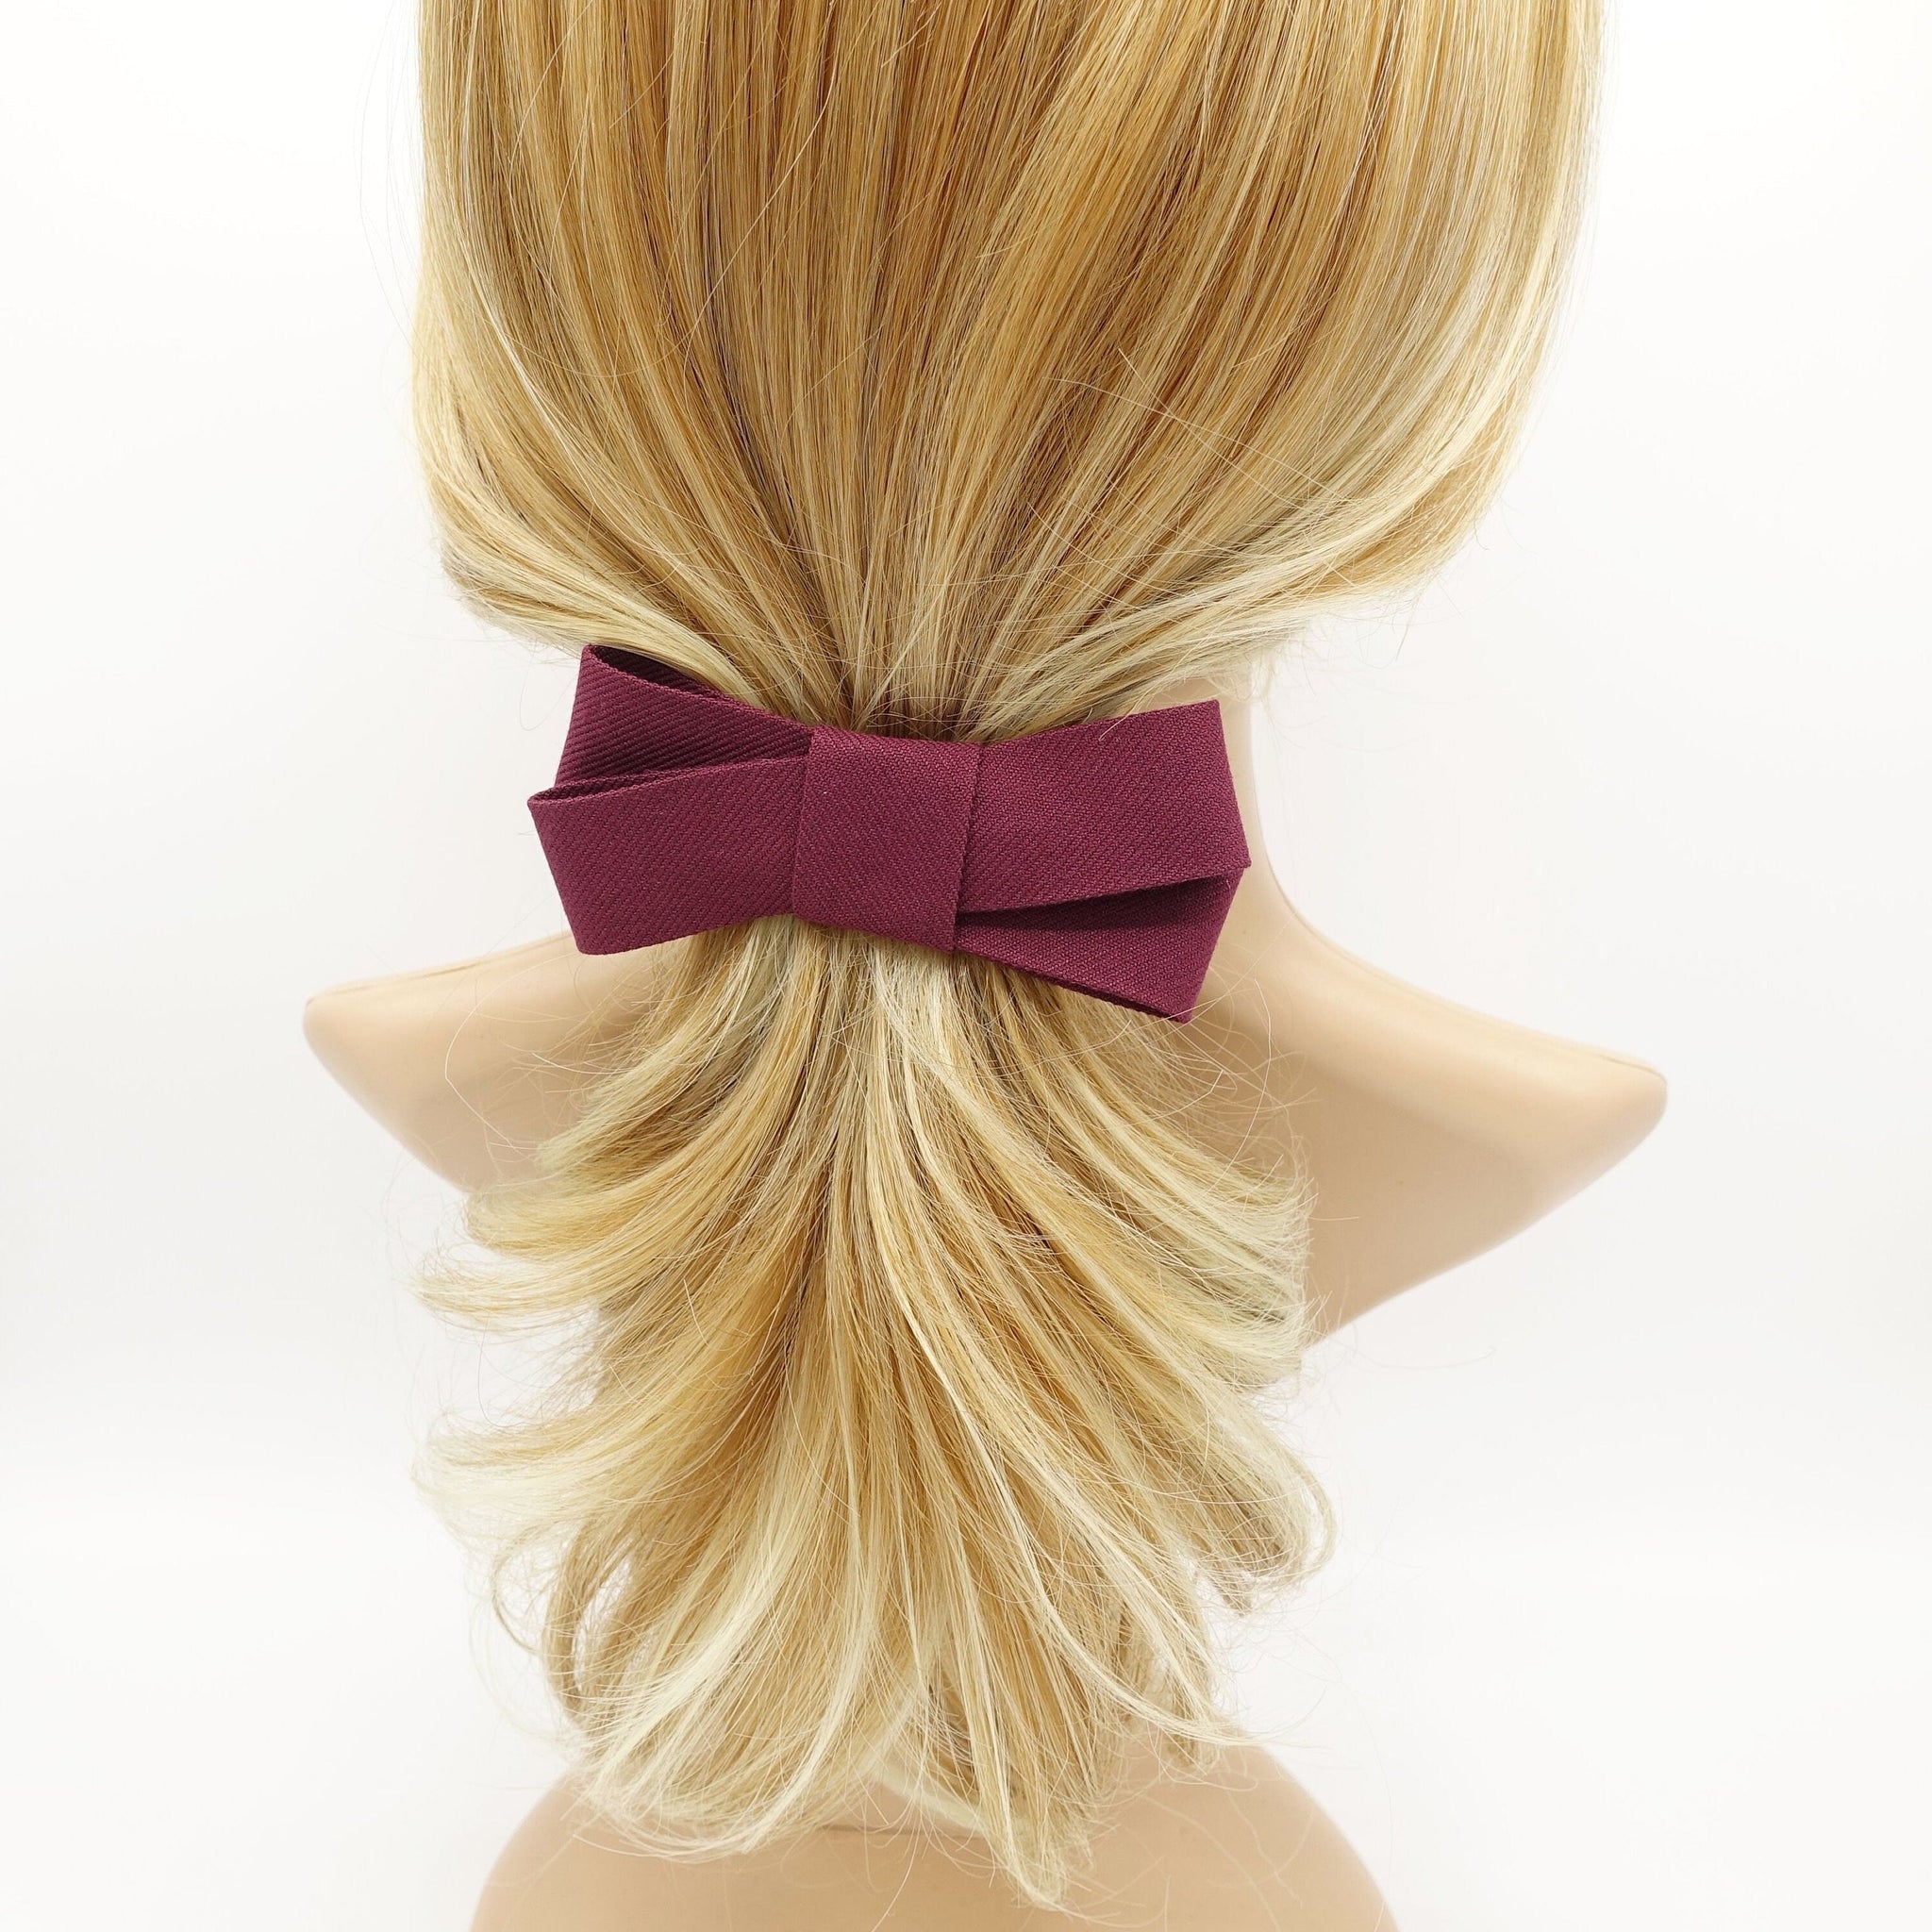 veryshine.com Hair Clip Red wine criss cross bow x pattern hair bow Fall Winter women accessory